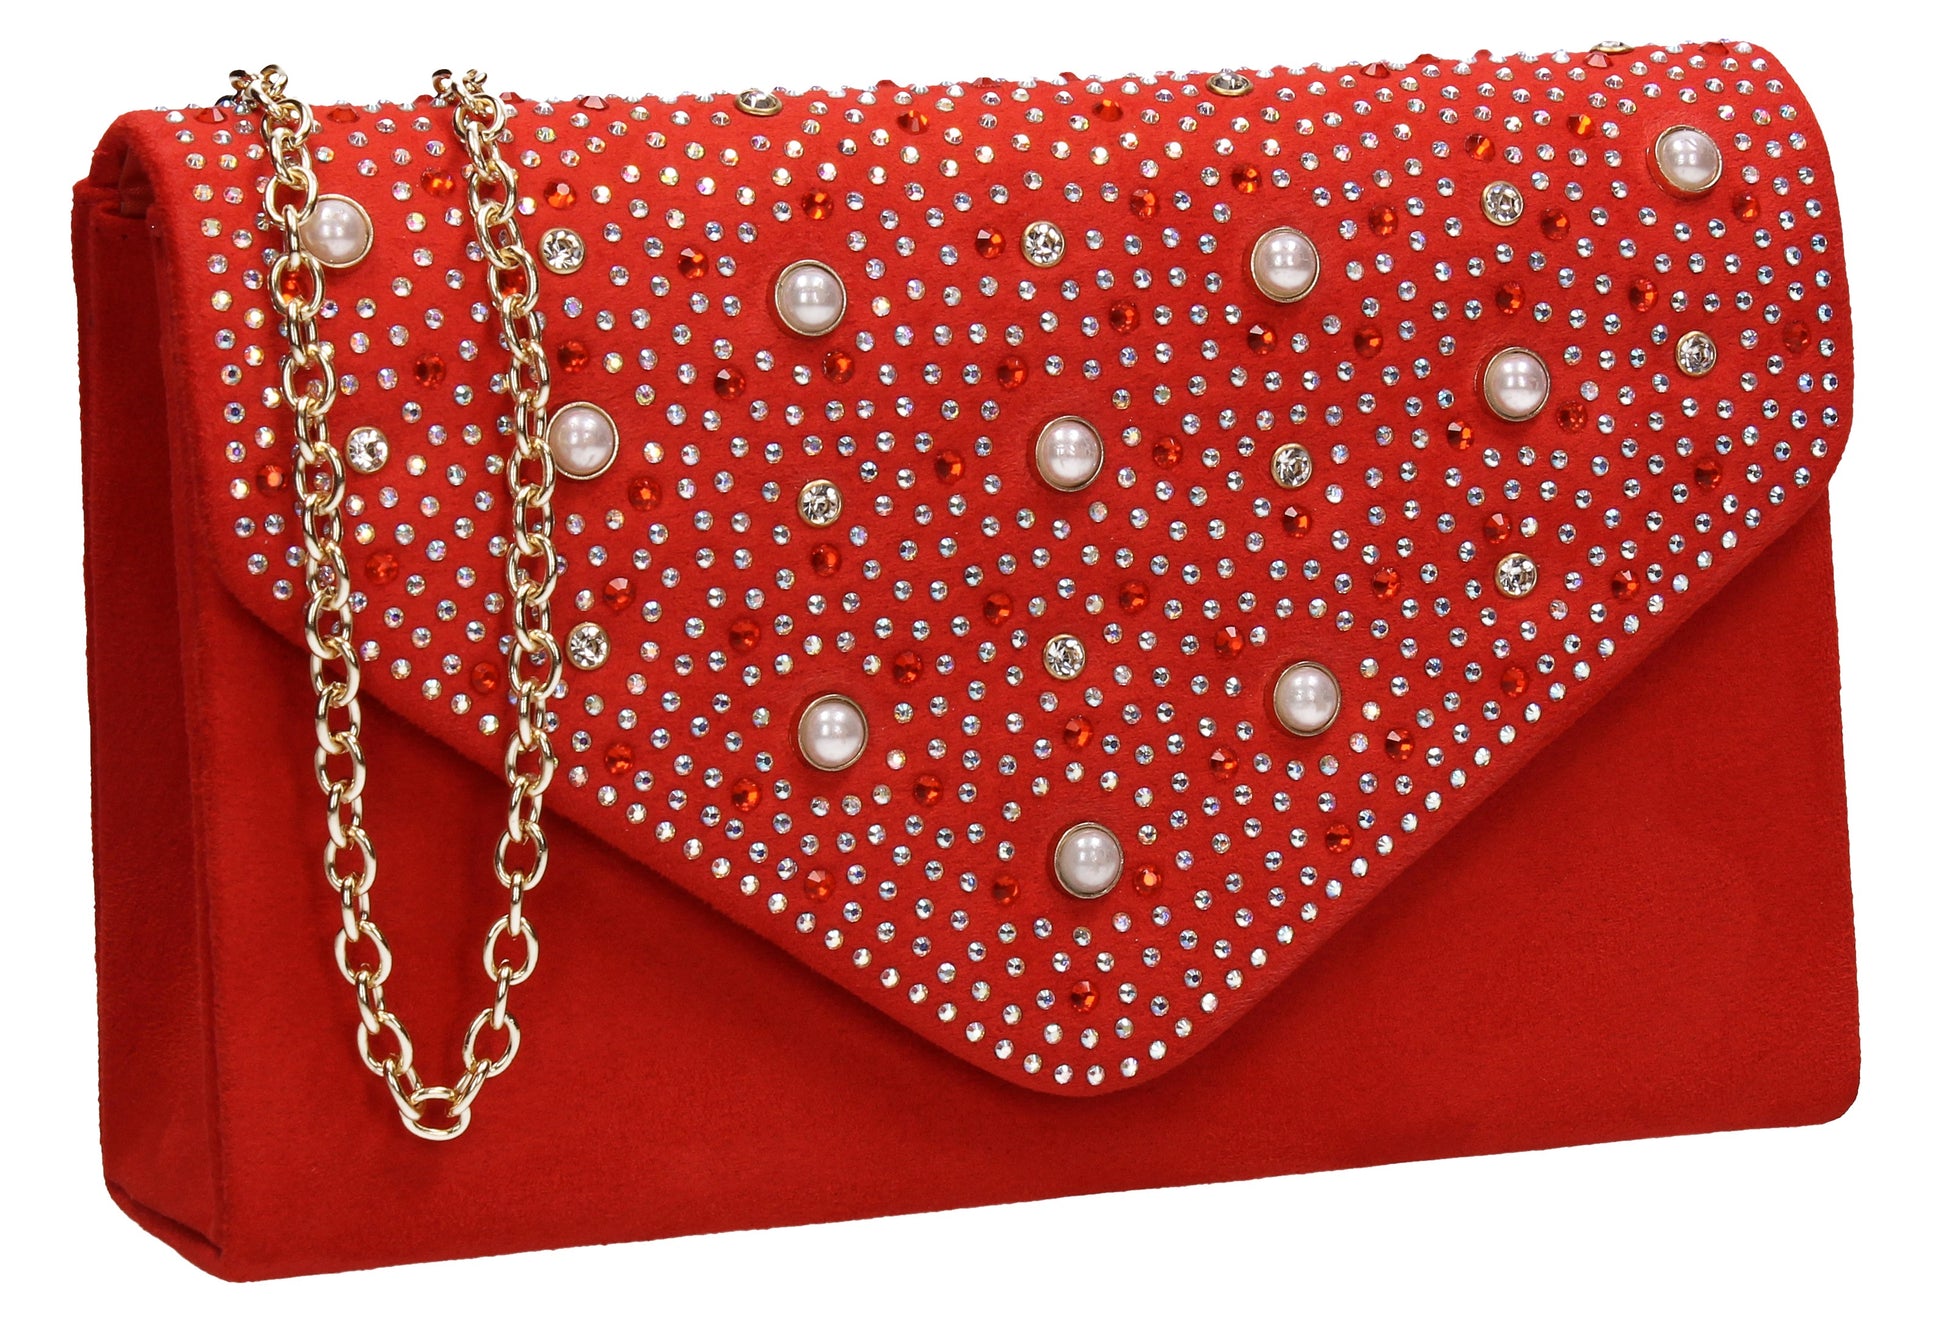 SWANKYSWANS Laurel Clutch Bag Scarlet Orange Cute Cheap Clutch Bag For Weddings School and Work